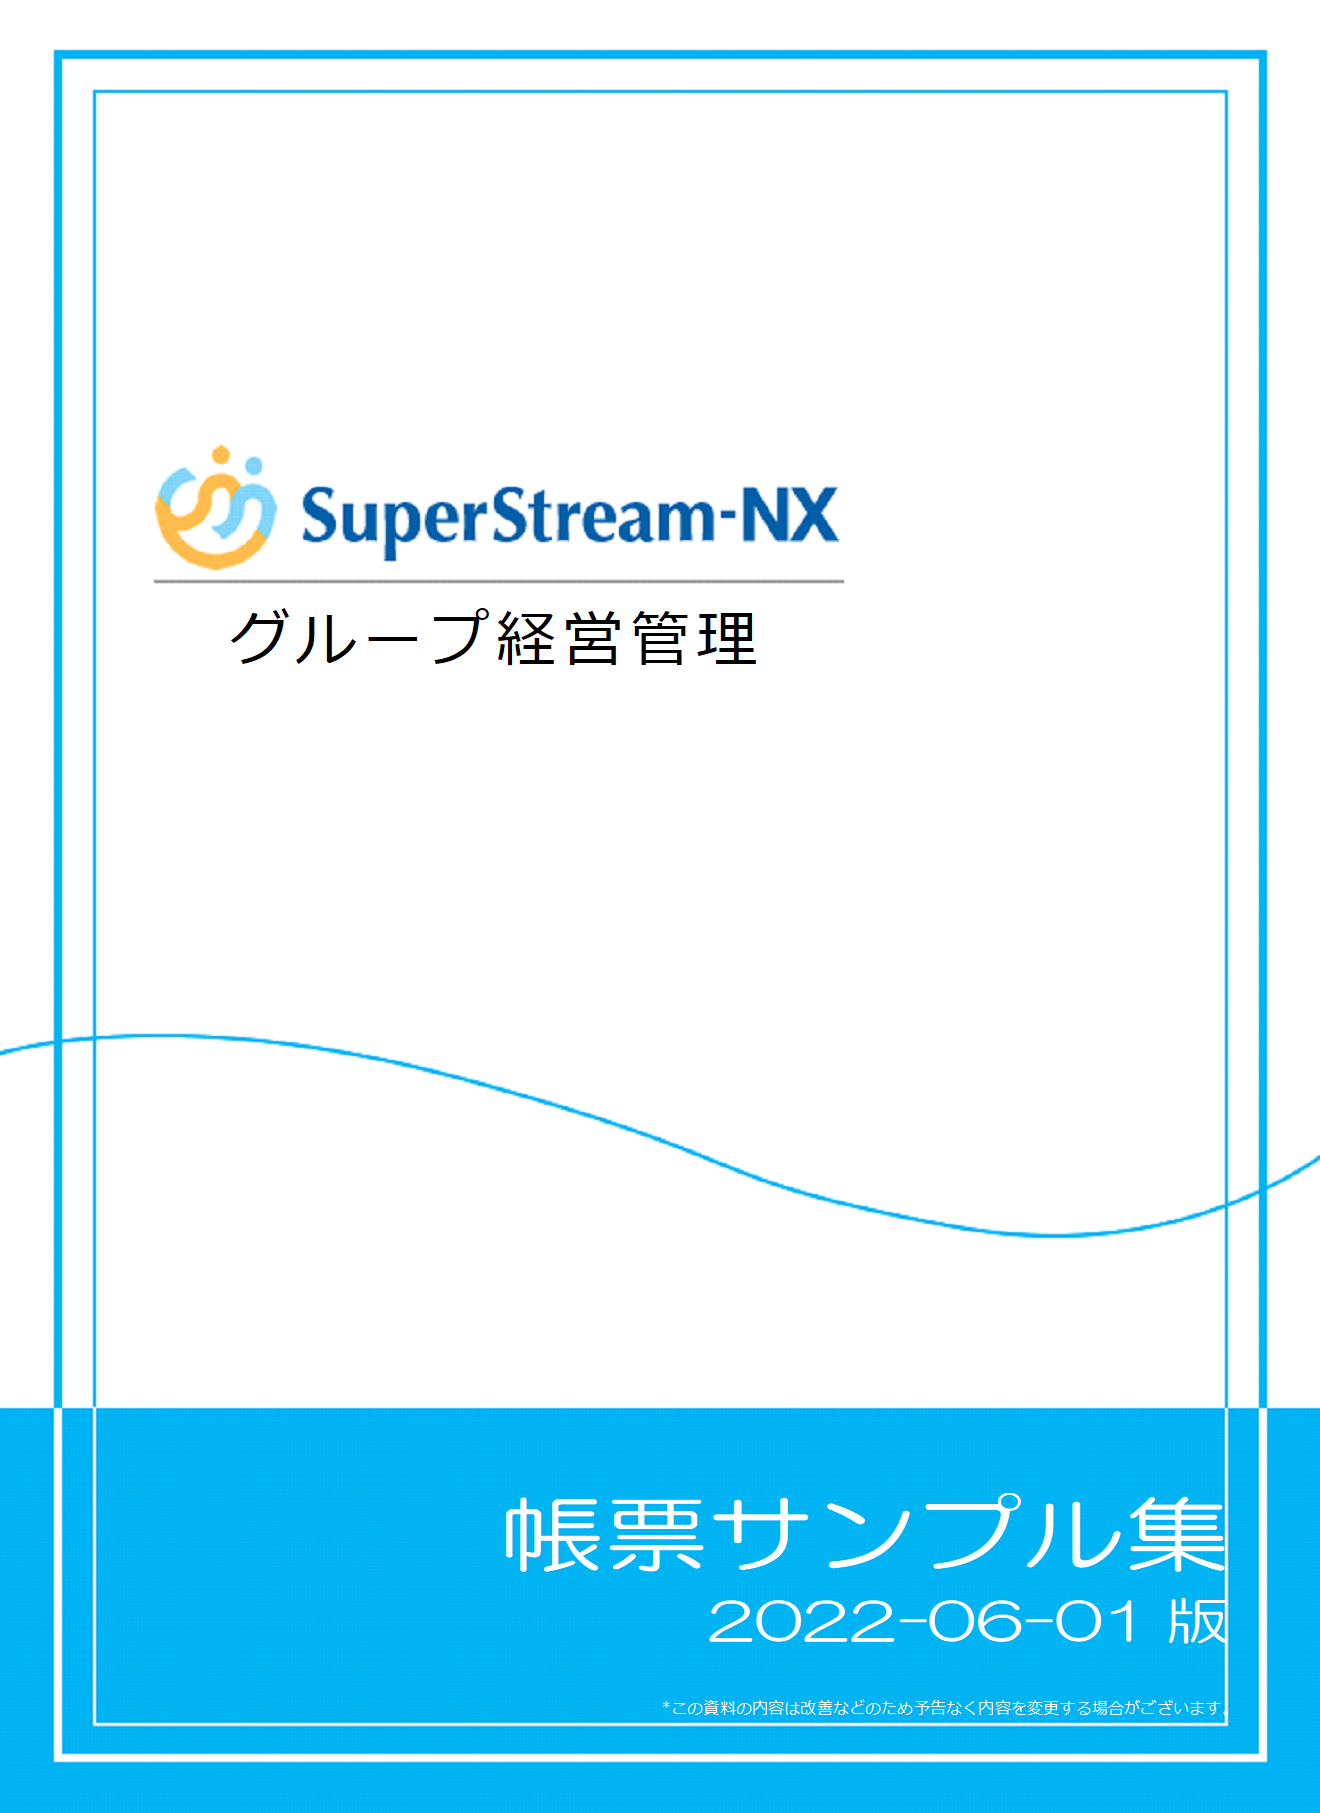 SuperStream-NX グループ経営管理 帳票サンプル集